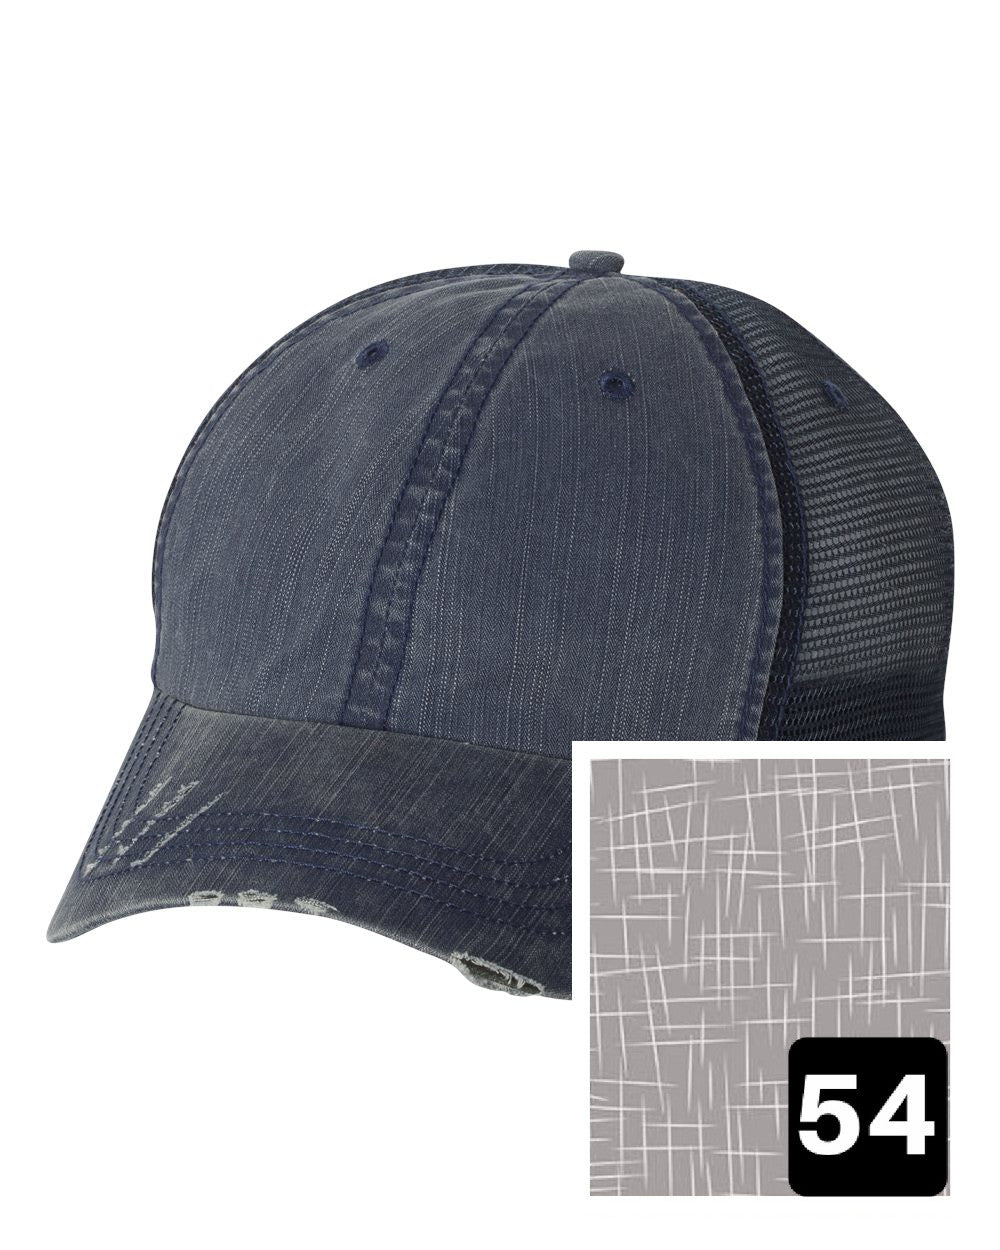 Nevada Hat | Navy Distressed Trucker Cap | Many Fabric Choices